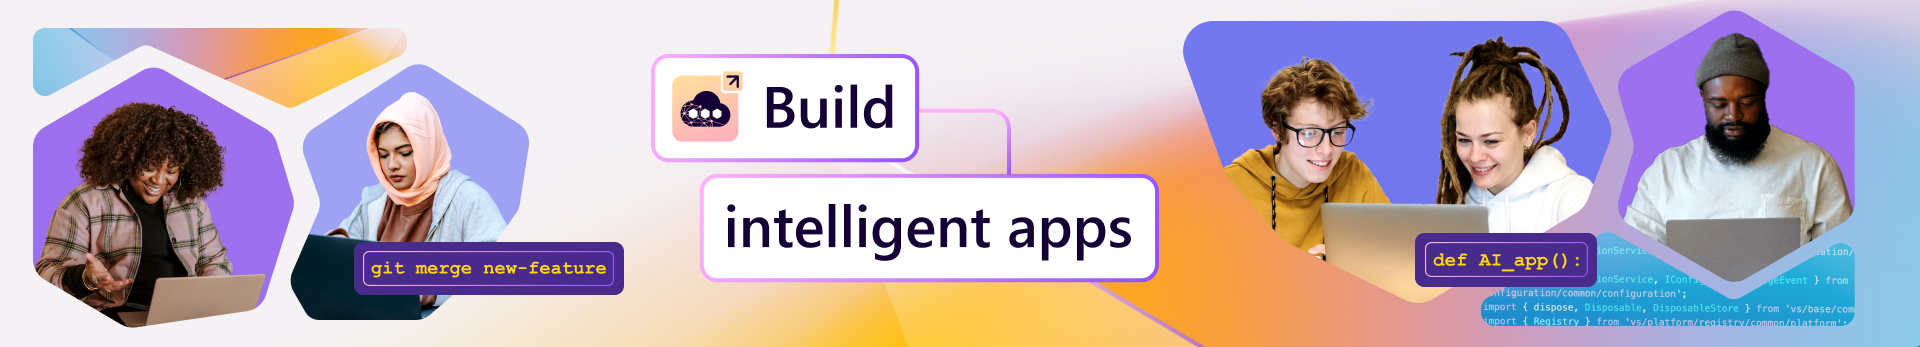 Build intelligent apps